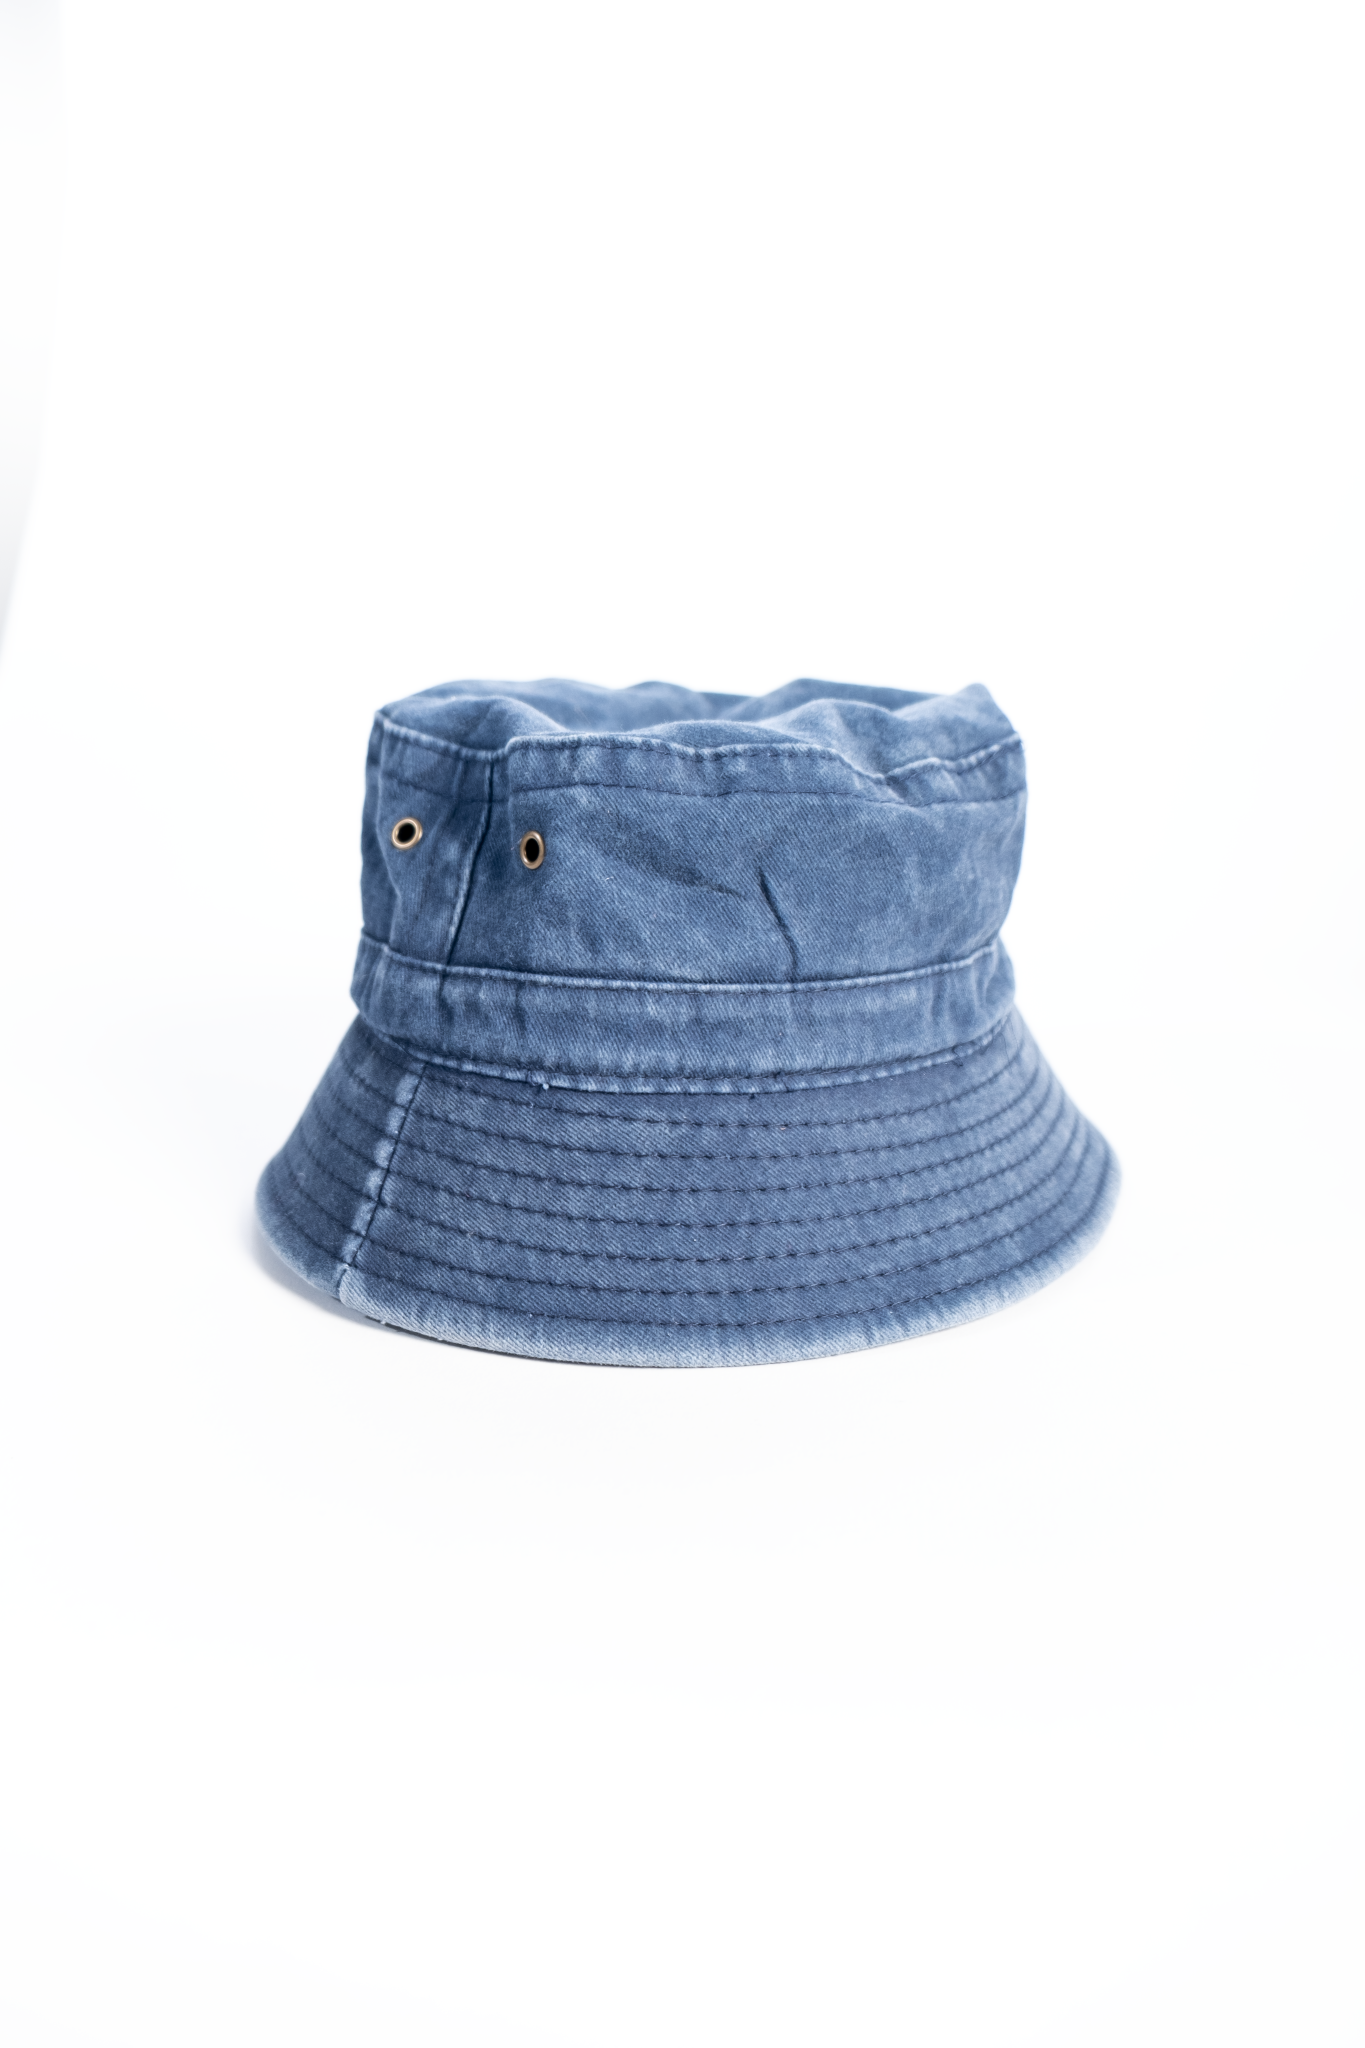 Gondwana Bucket Hat Blue